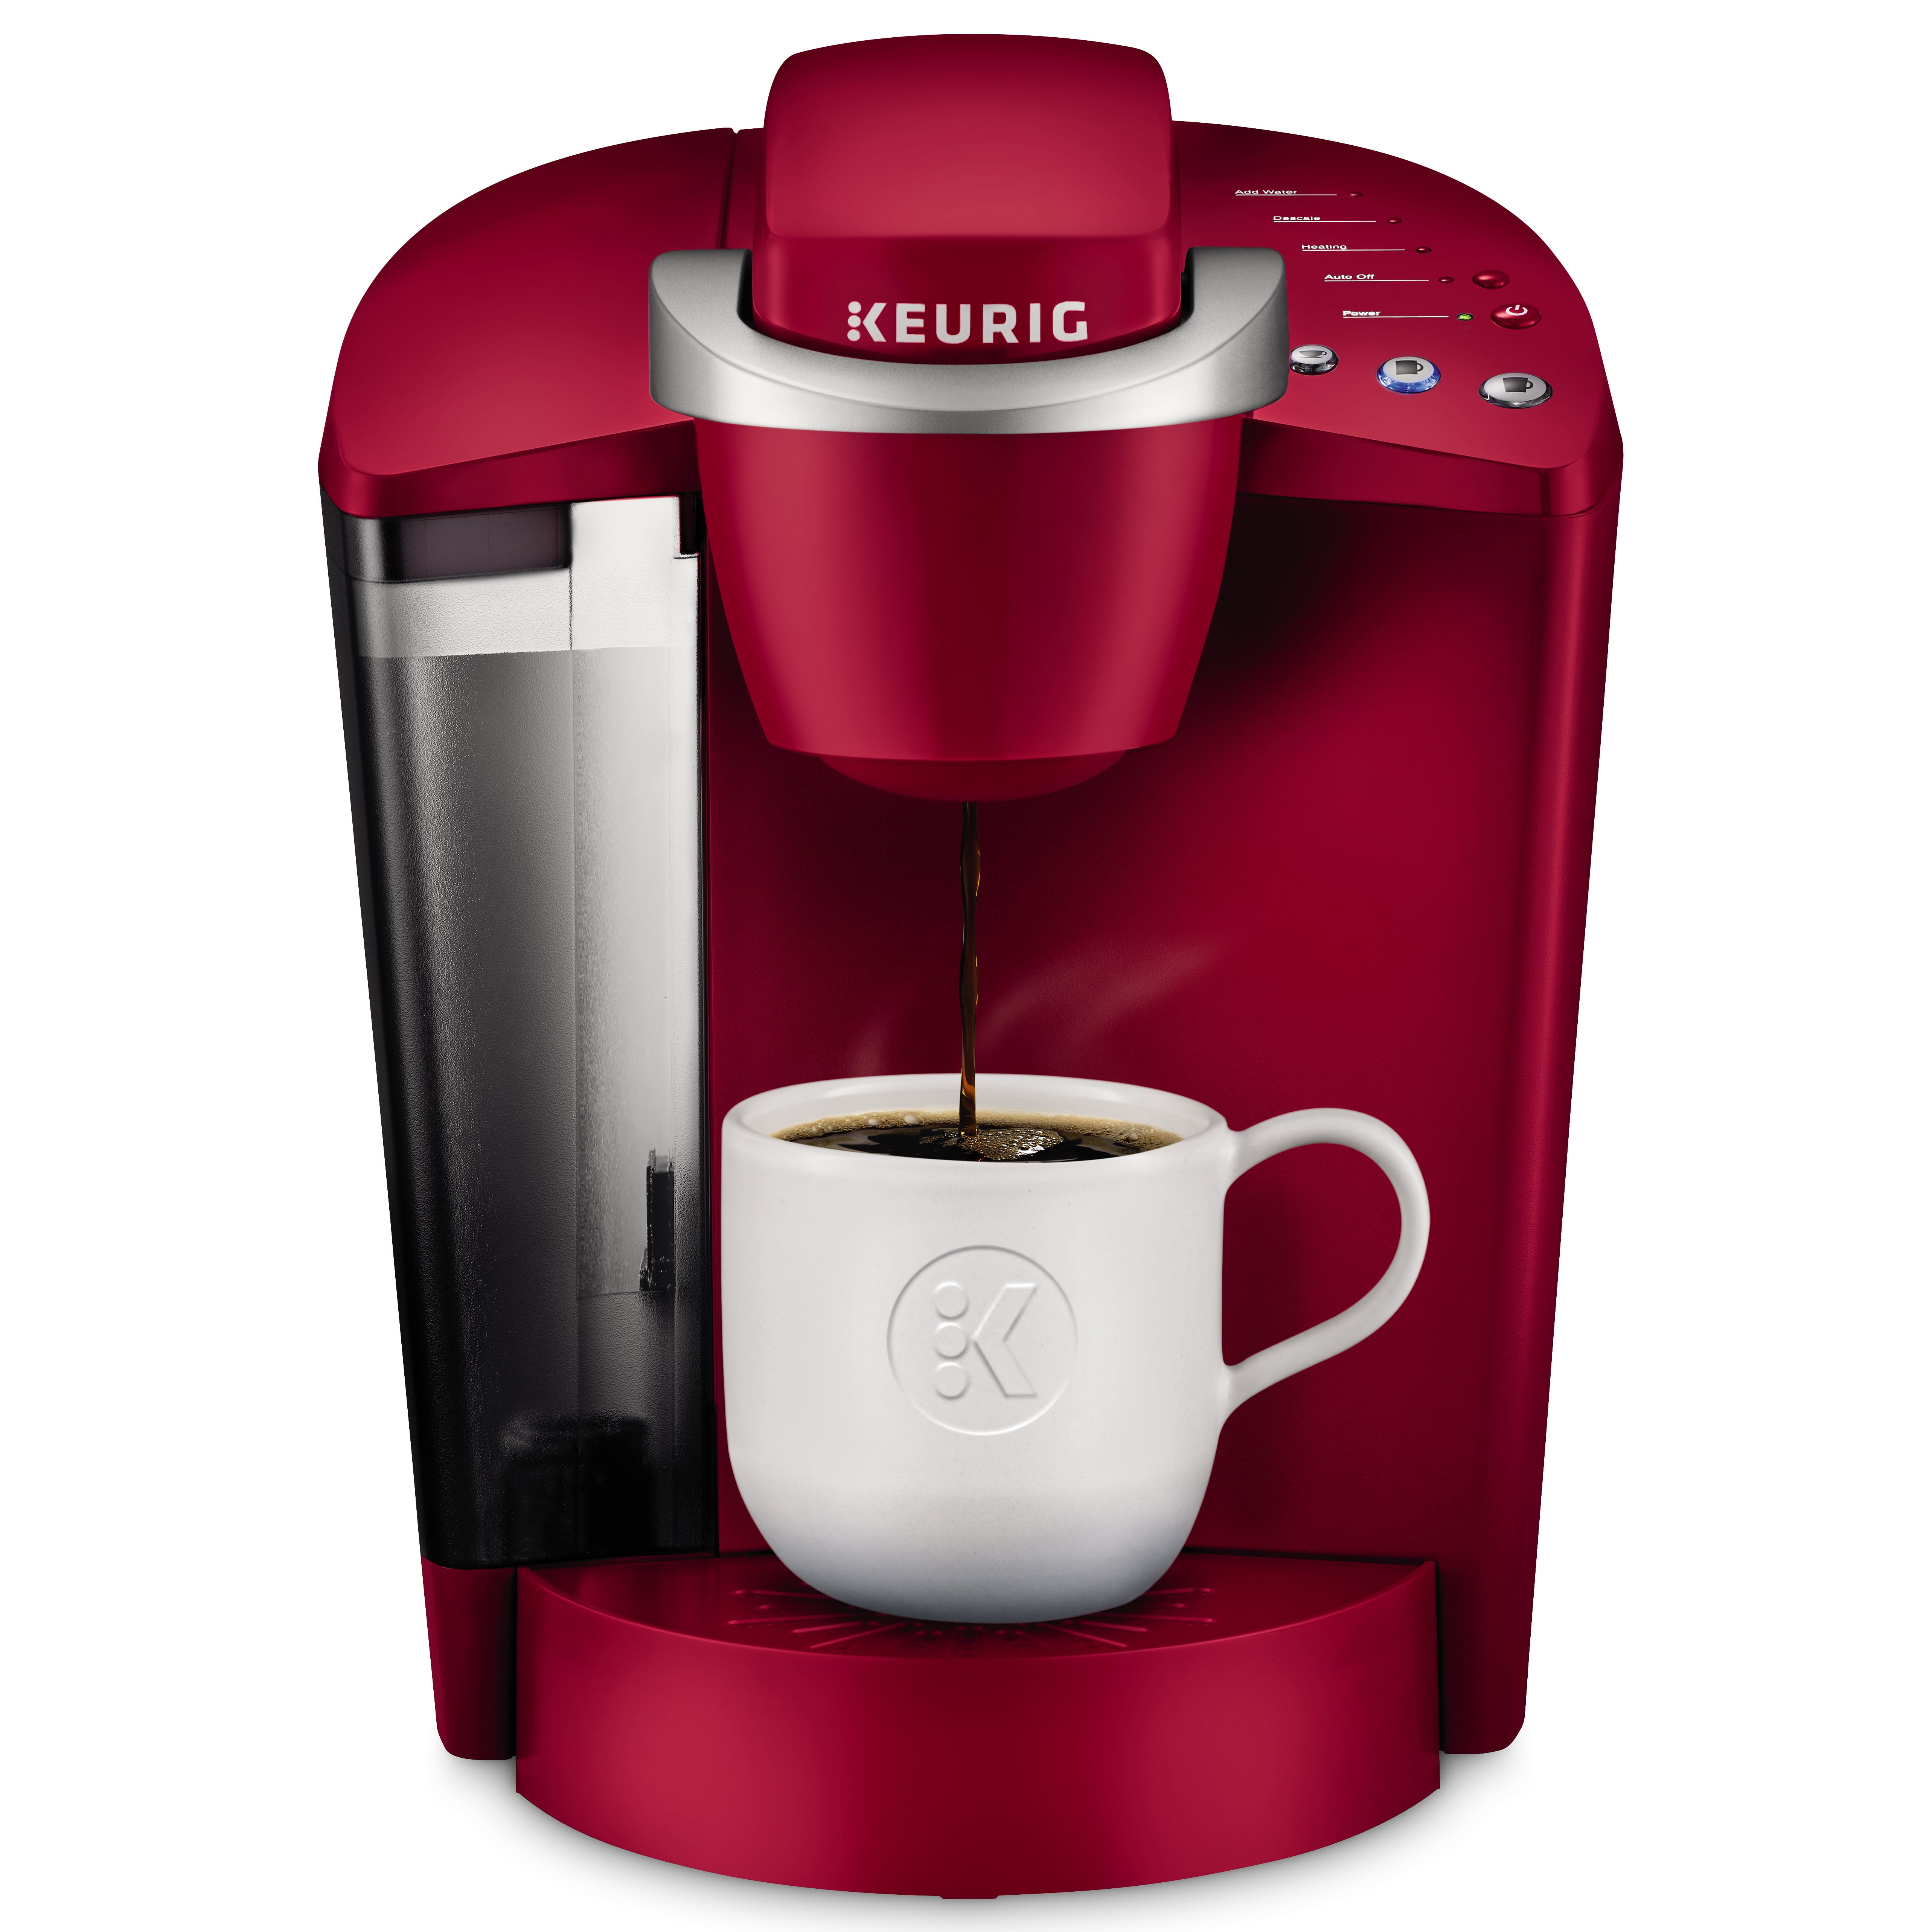 Keurig K130 Coffee Maker Silver for sale online 